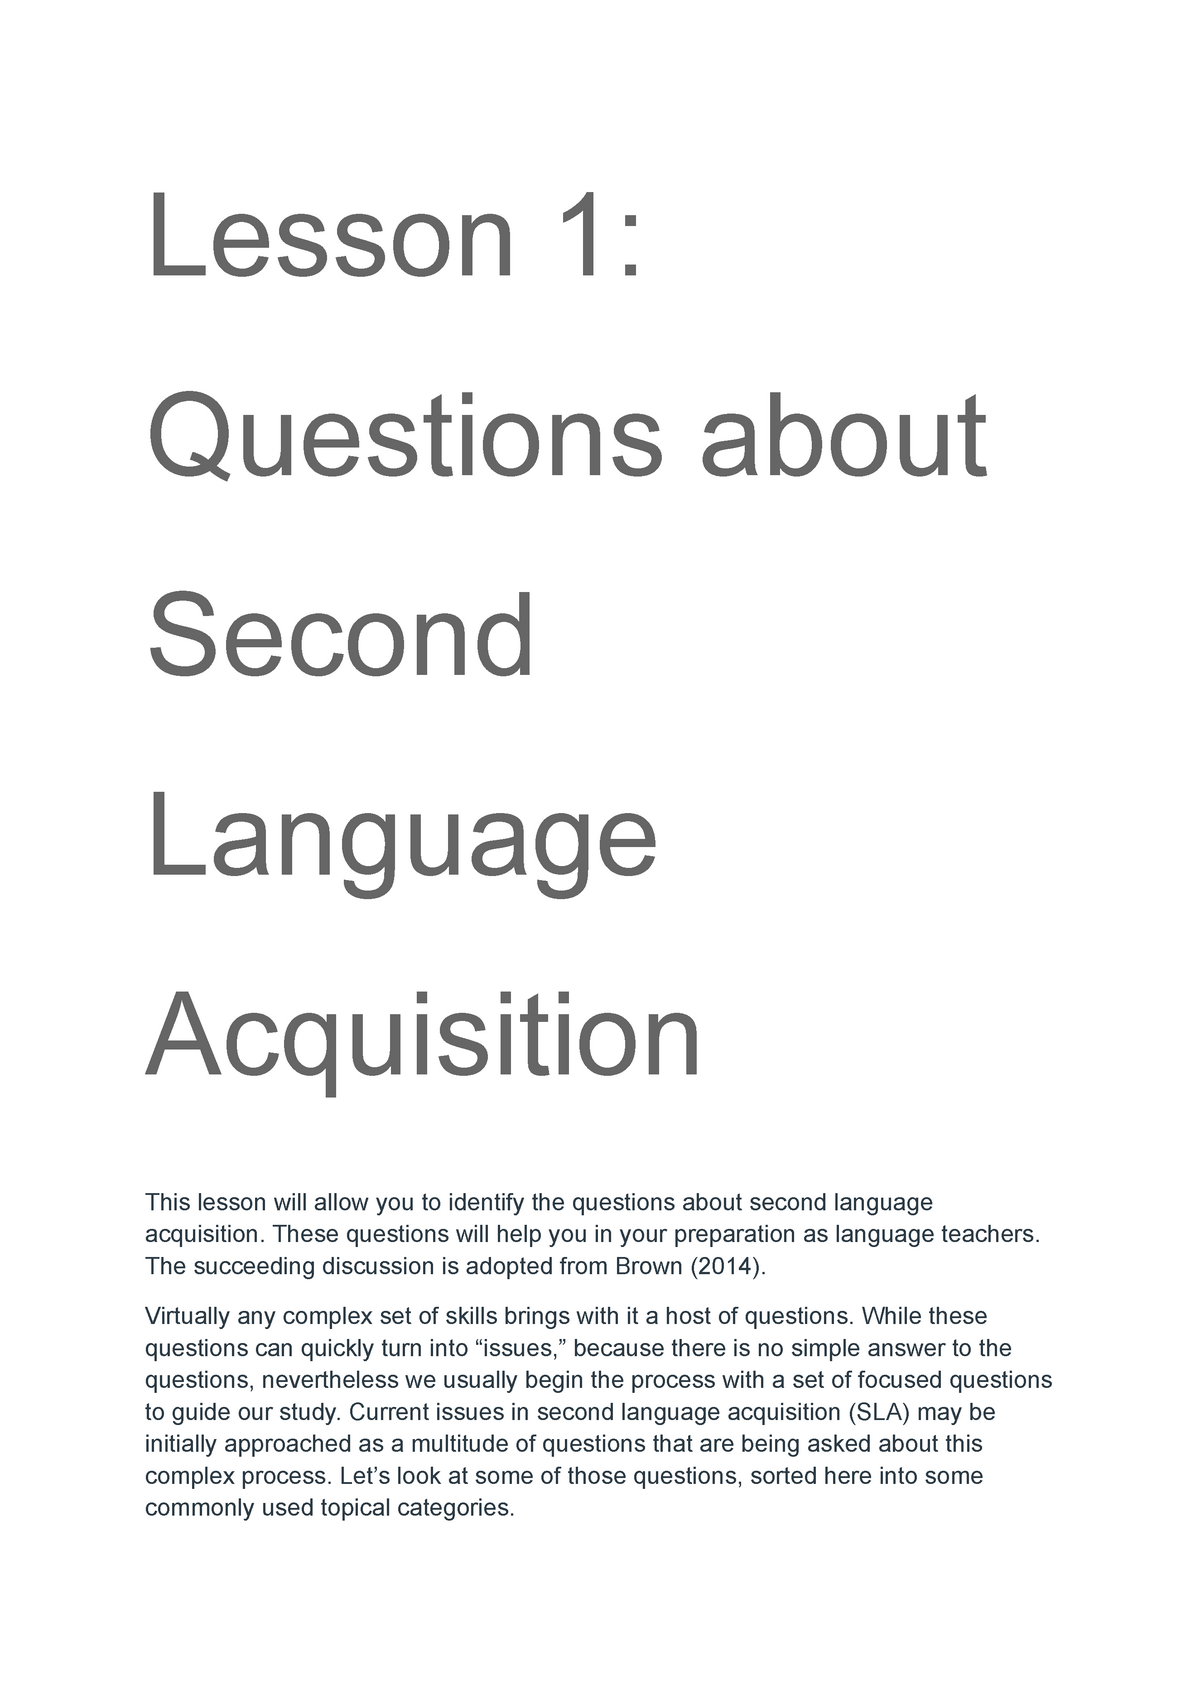 research questions about language acquisition